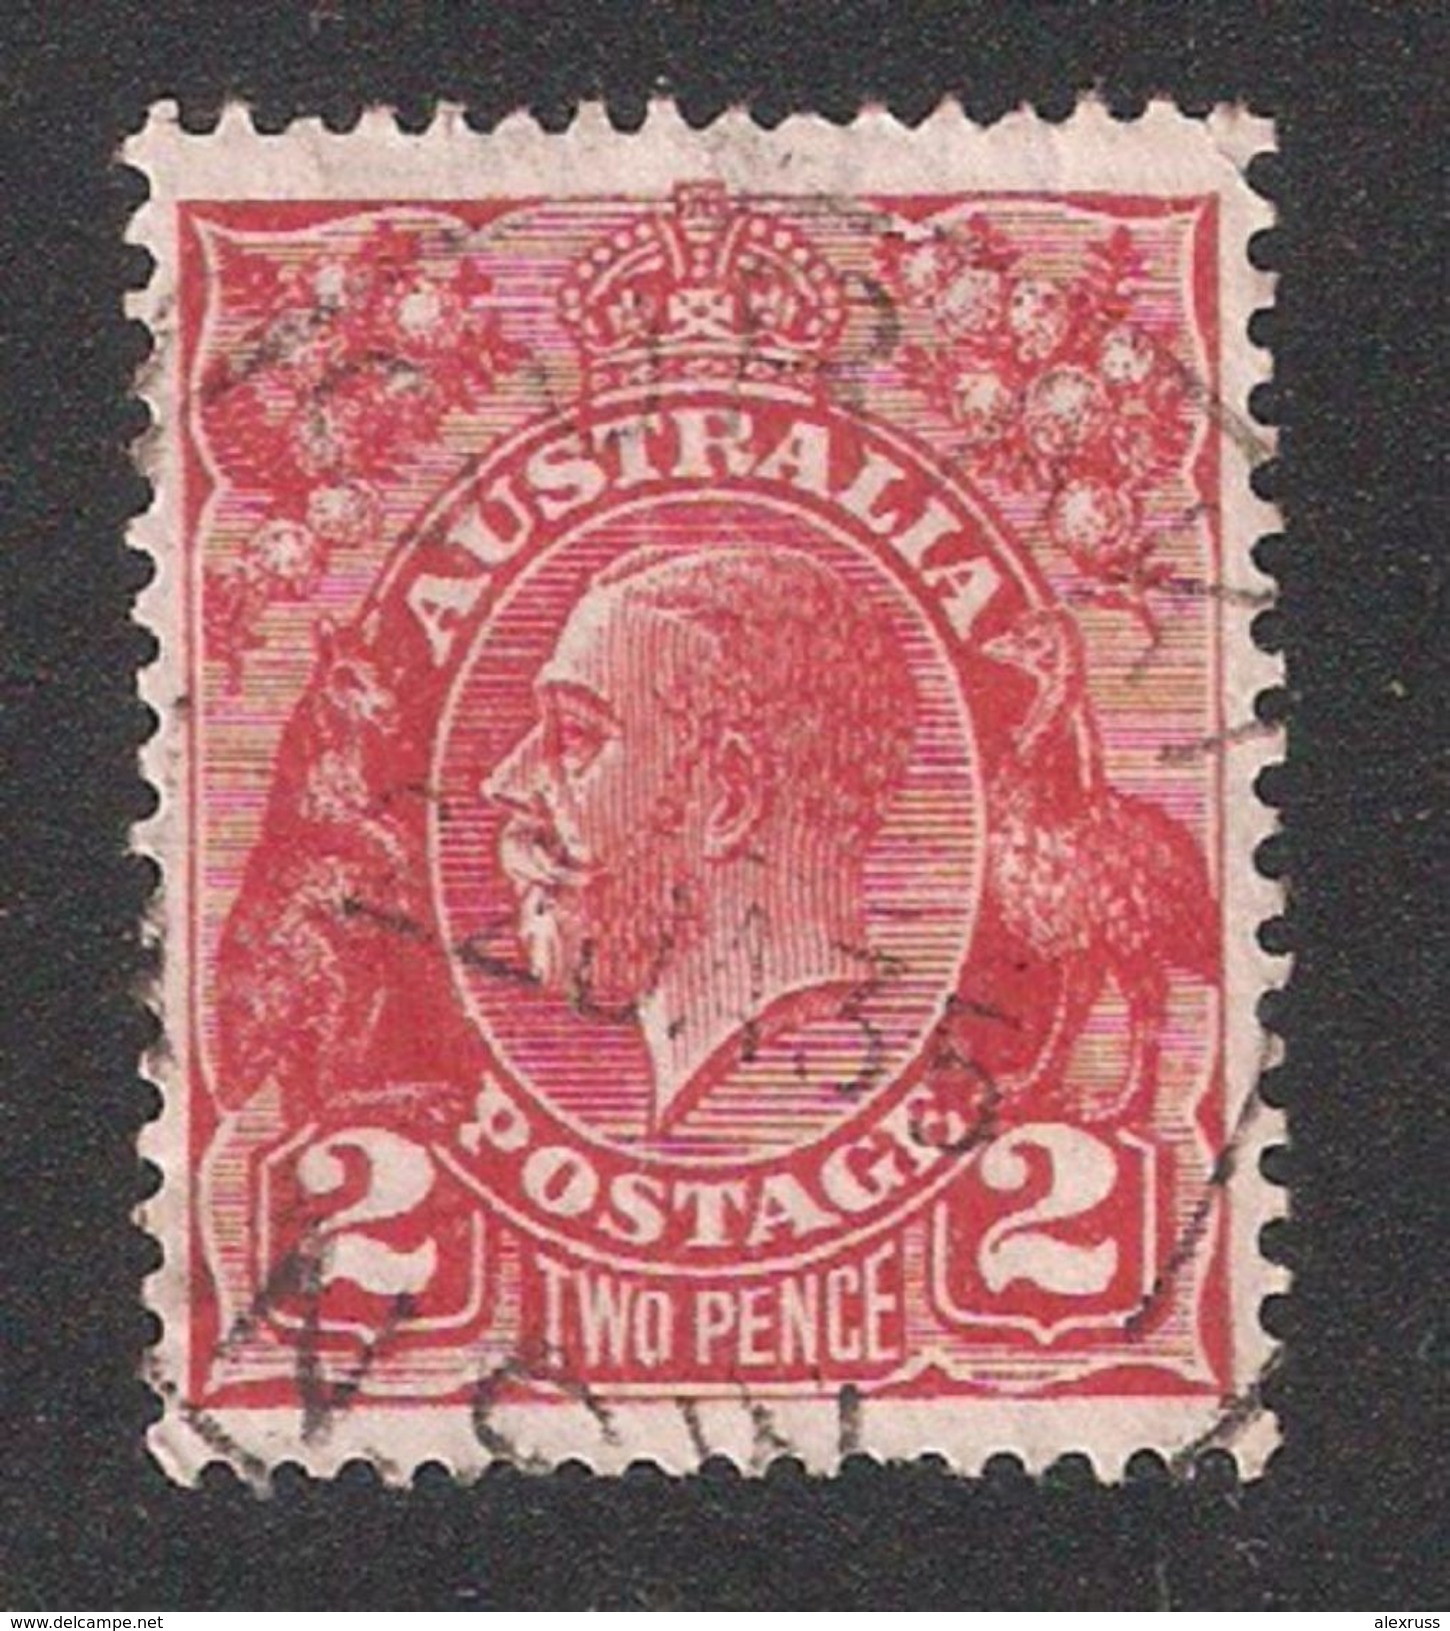 Australia 1931 KGV,2p,RARE Inverted Wmk 228,Sc 116,Fine Used - Variedades Y Curiosidades